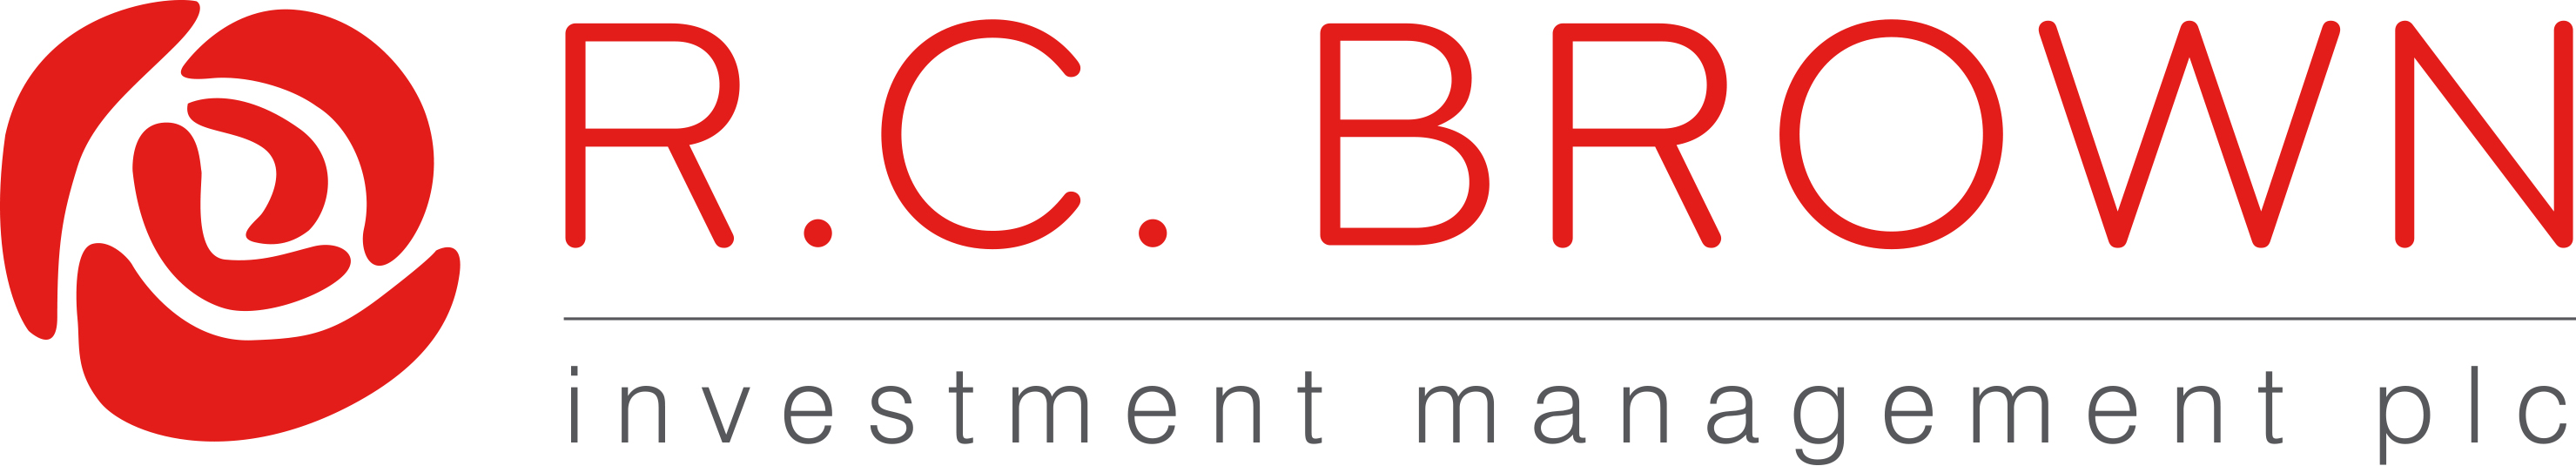 R.C. Brown Investment Management plc